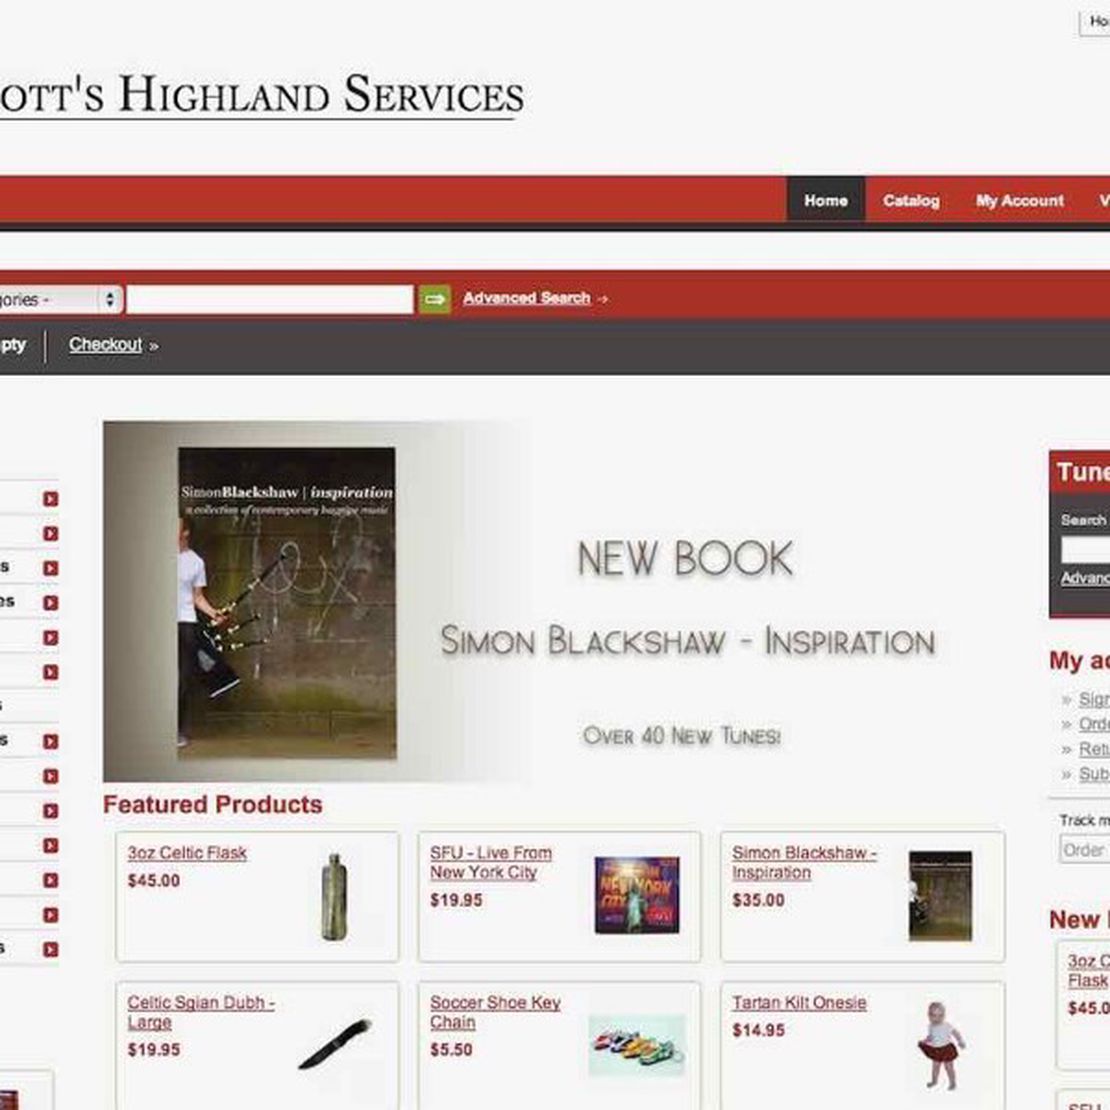 scott's highland services ltd.